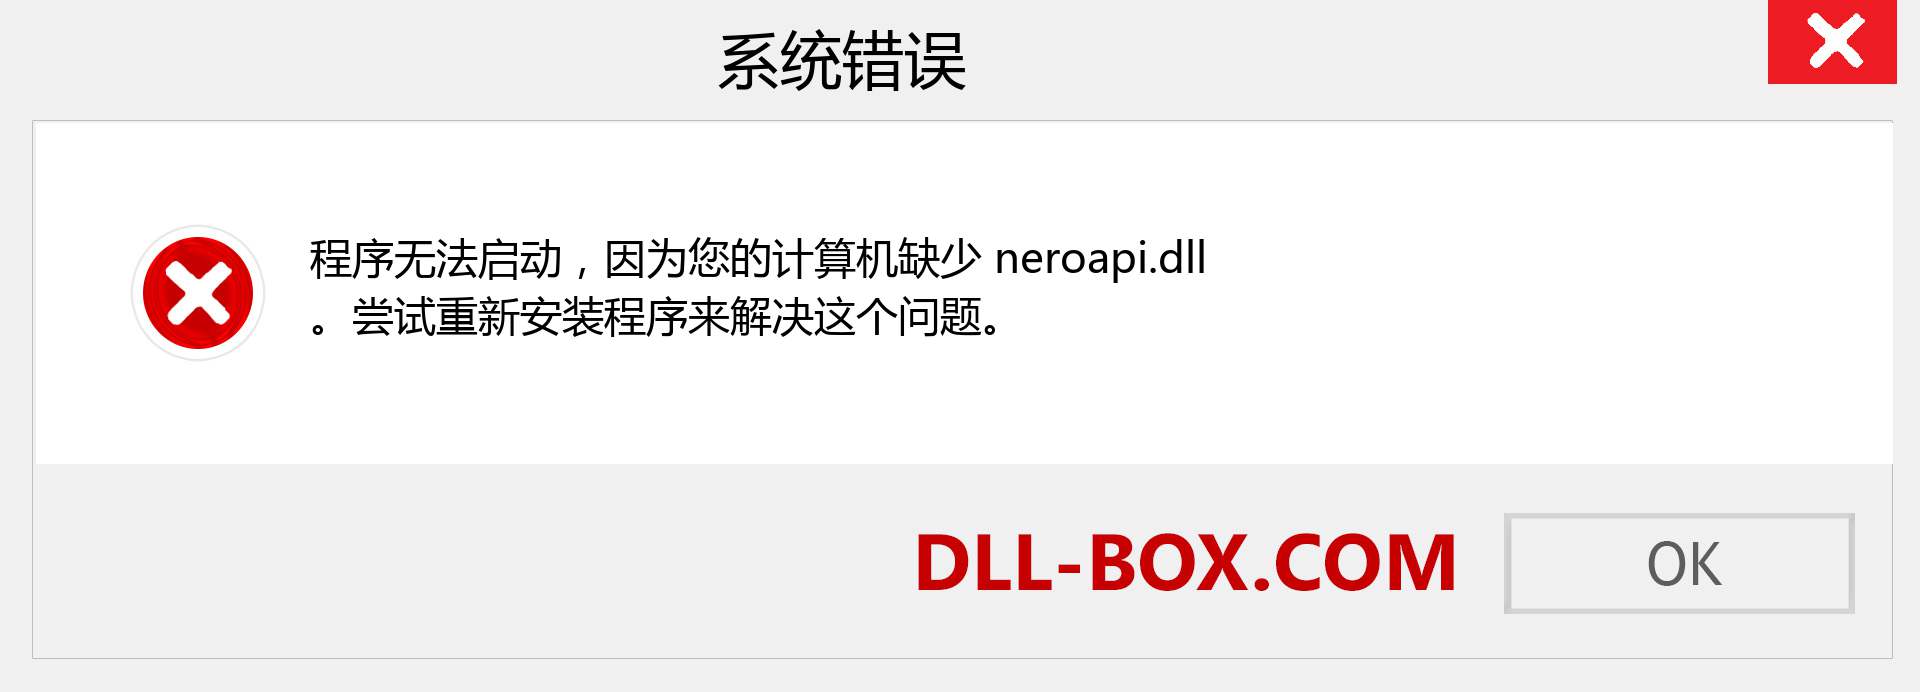 neroapi.dll 文件丢失？。 适用于 Windows 7、8、10 的下载 - 修复 Windows、照片、图像上的 neroapi dll 丢失错误